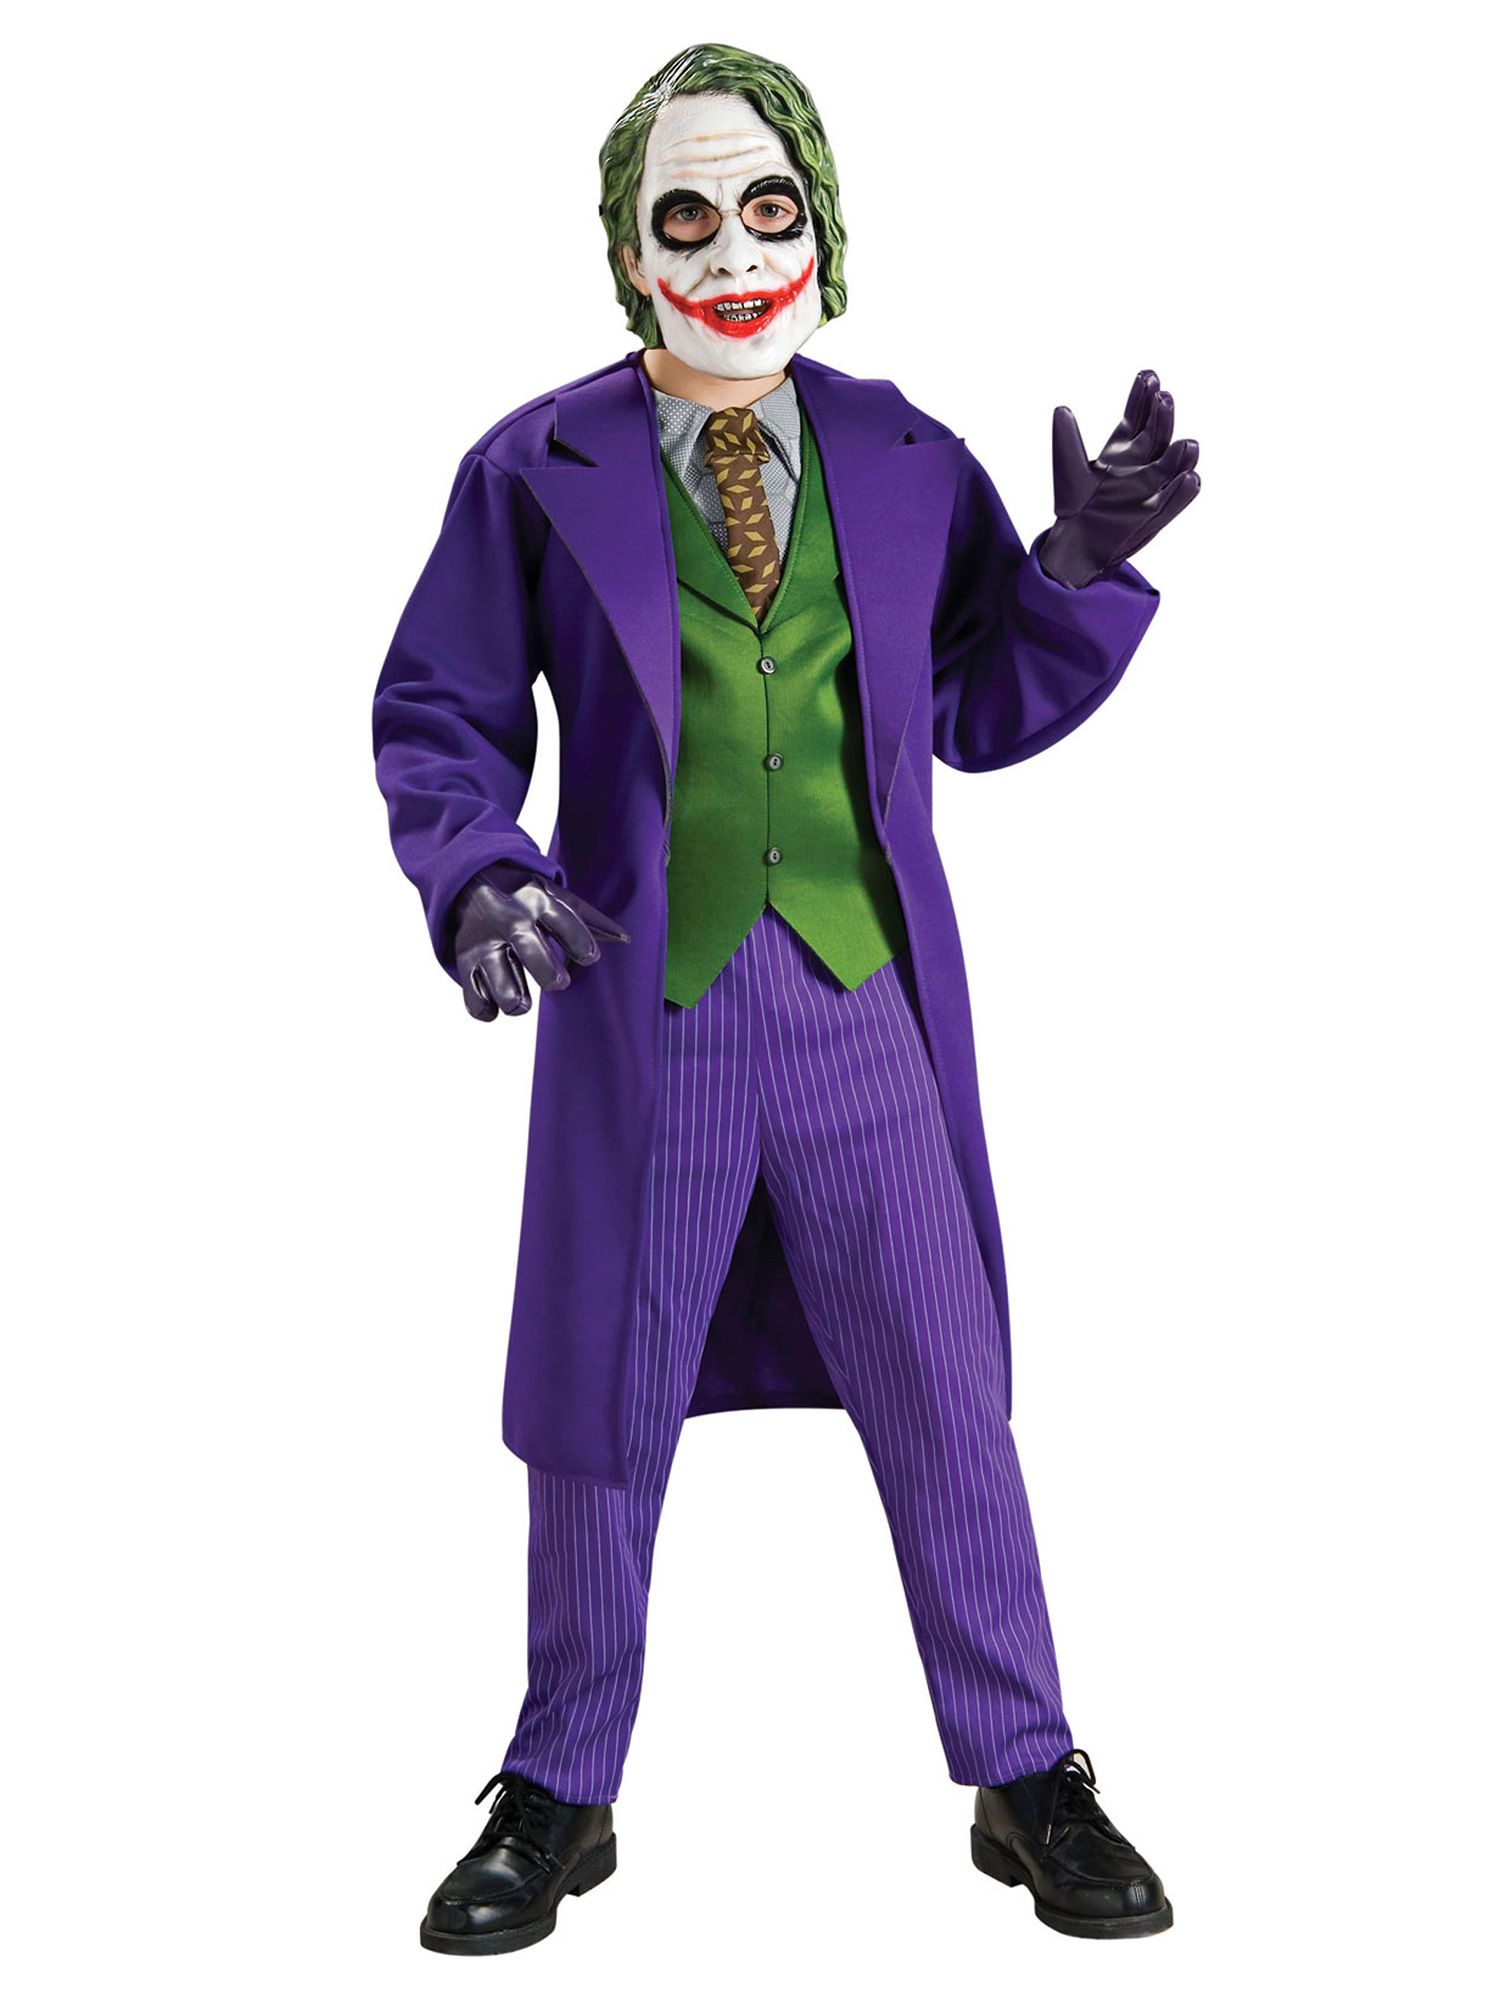 Batman The Joker Deluxe Boy's Halloween Fancy-Dress Costume for Child, S - image 1 of 2